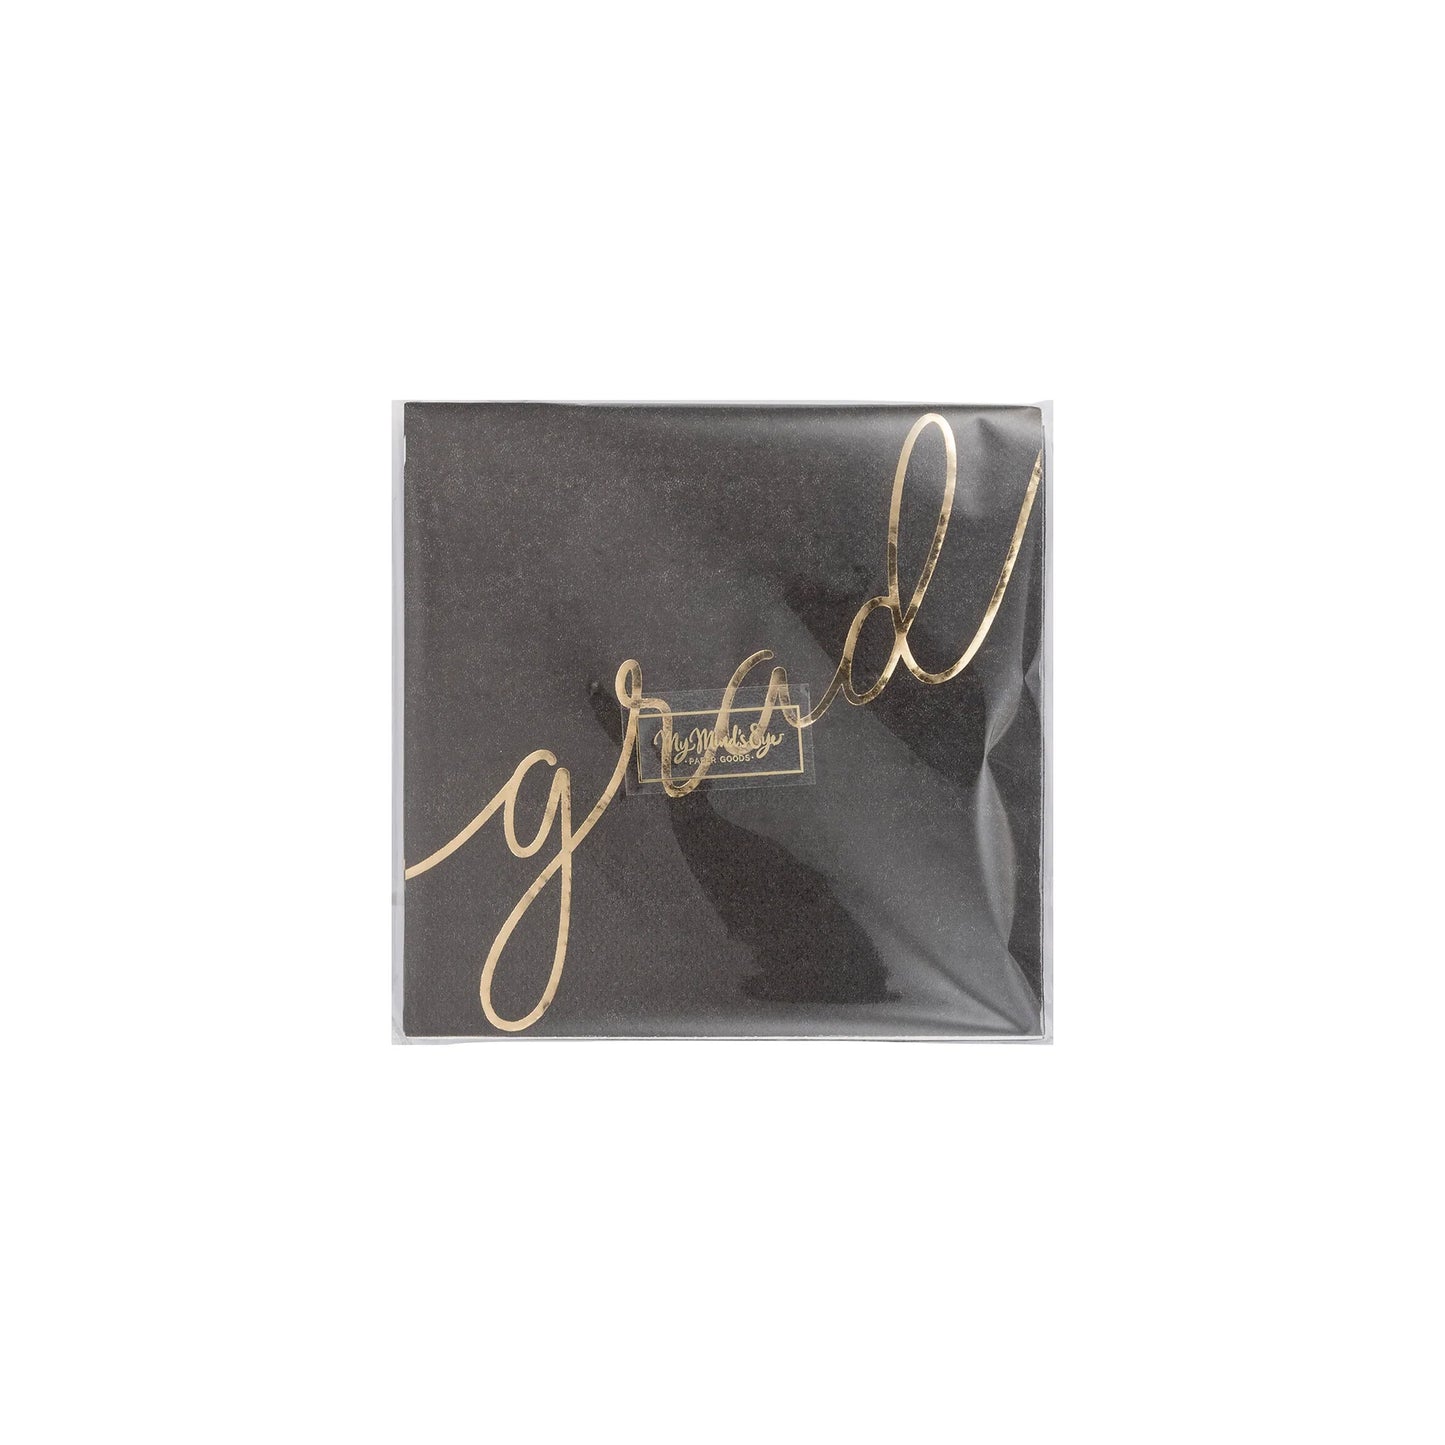 gold script 'GRAD' black cocktail napkins